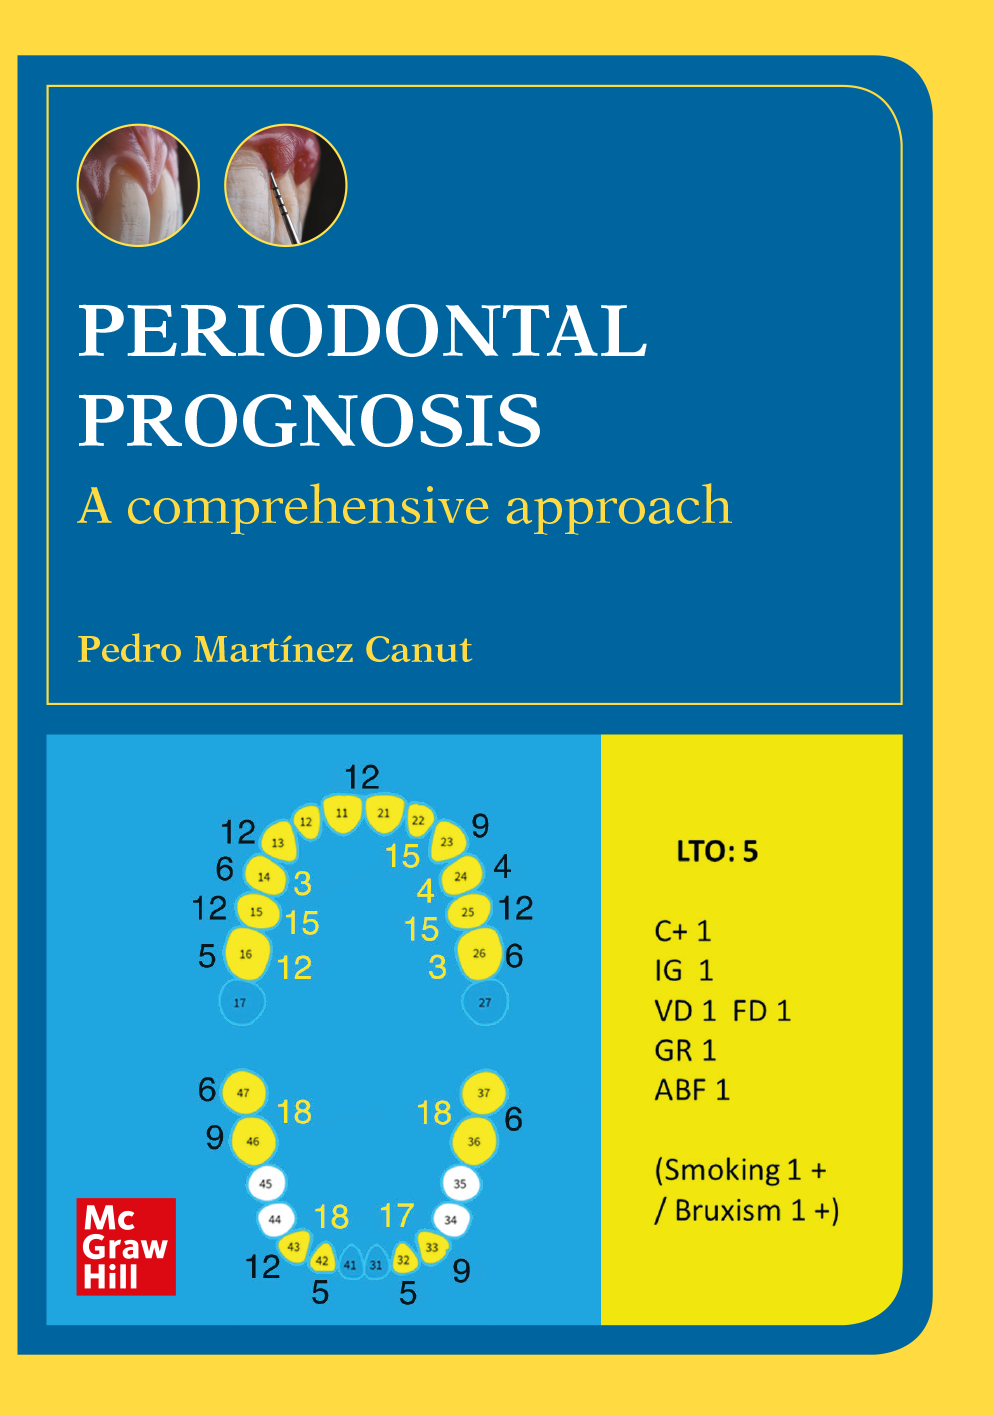 Periodontal prognosis. A comprehensive approach